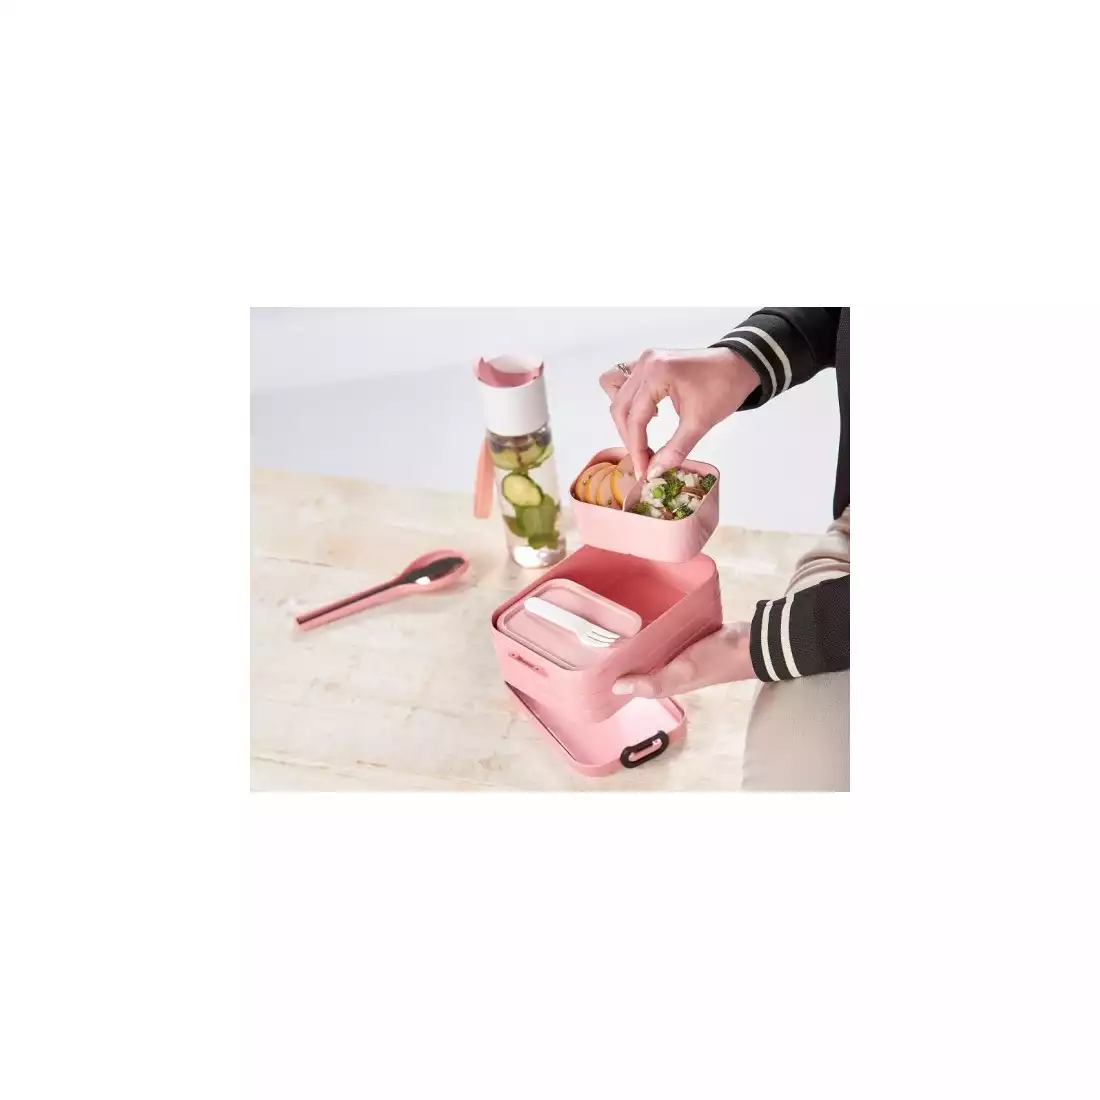 Mepal Take a Break Bento midi Nordic Pink lunchbox, růžový